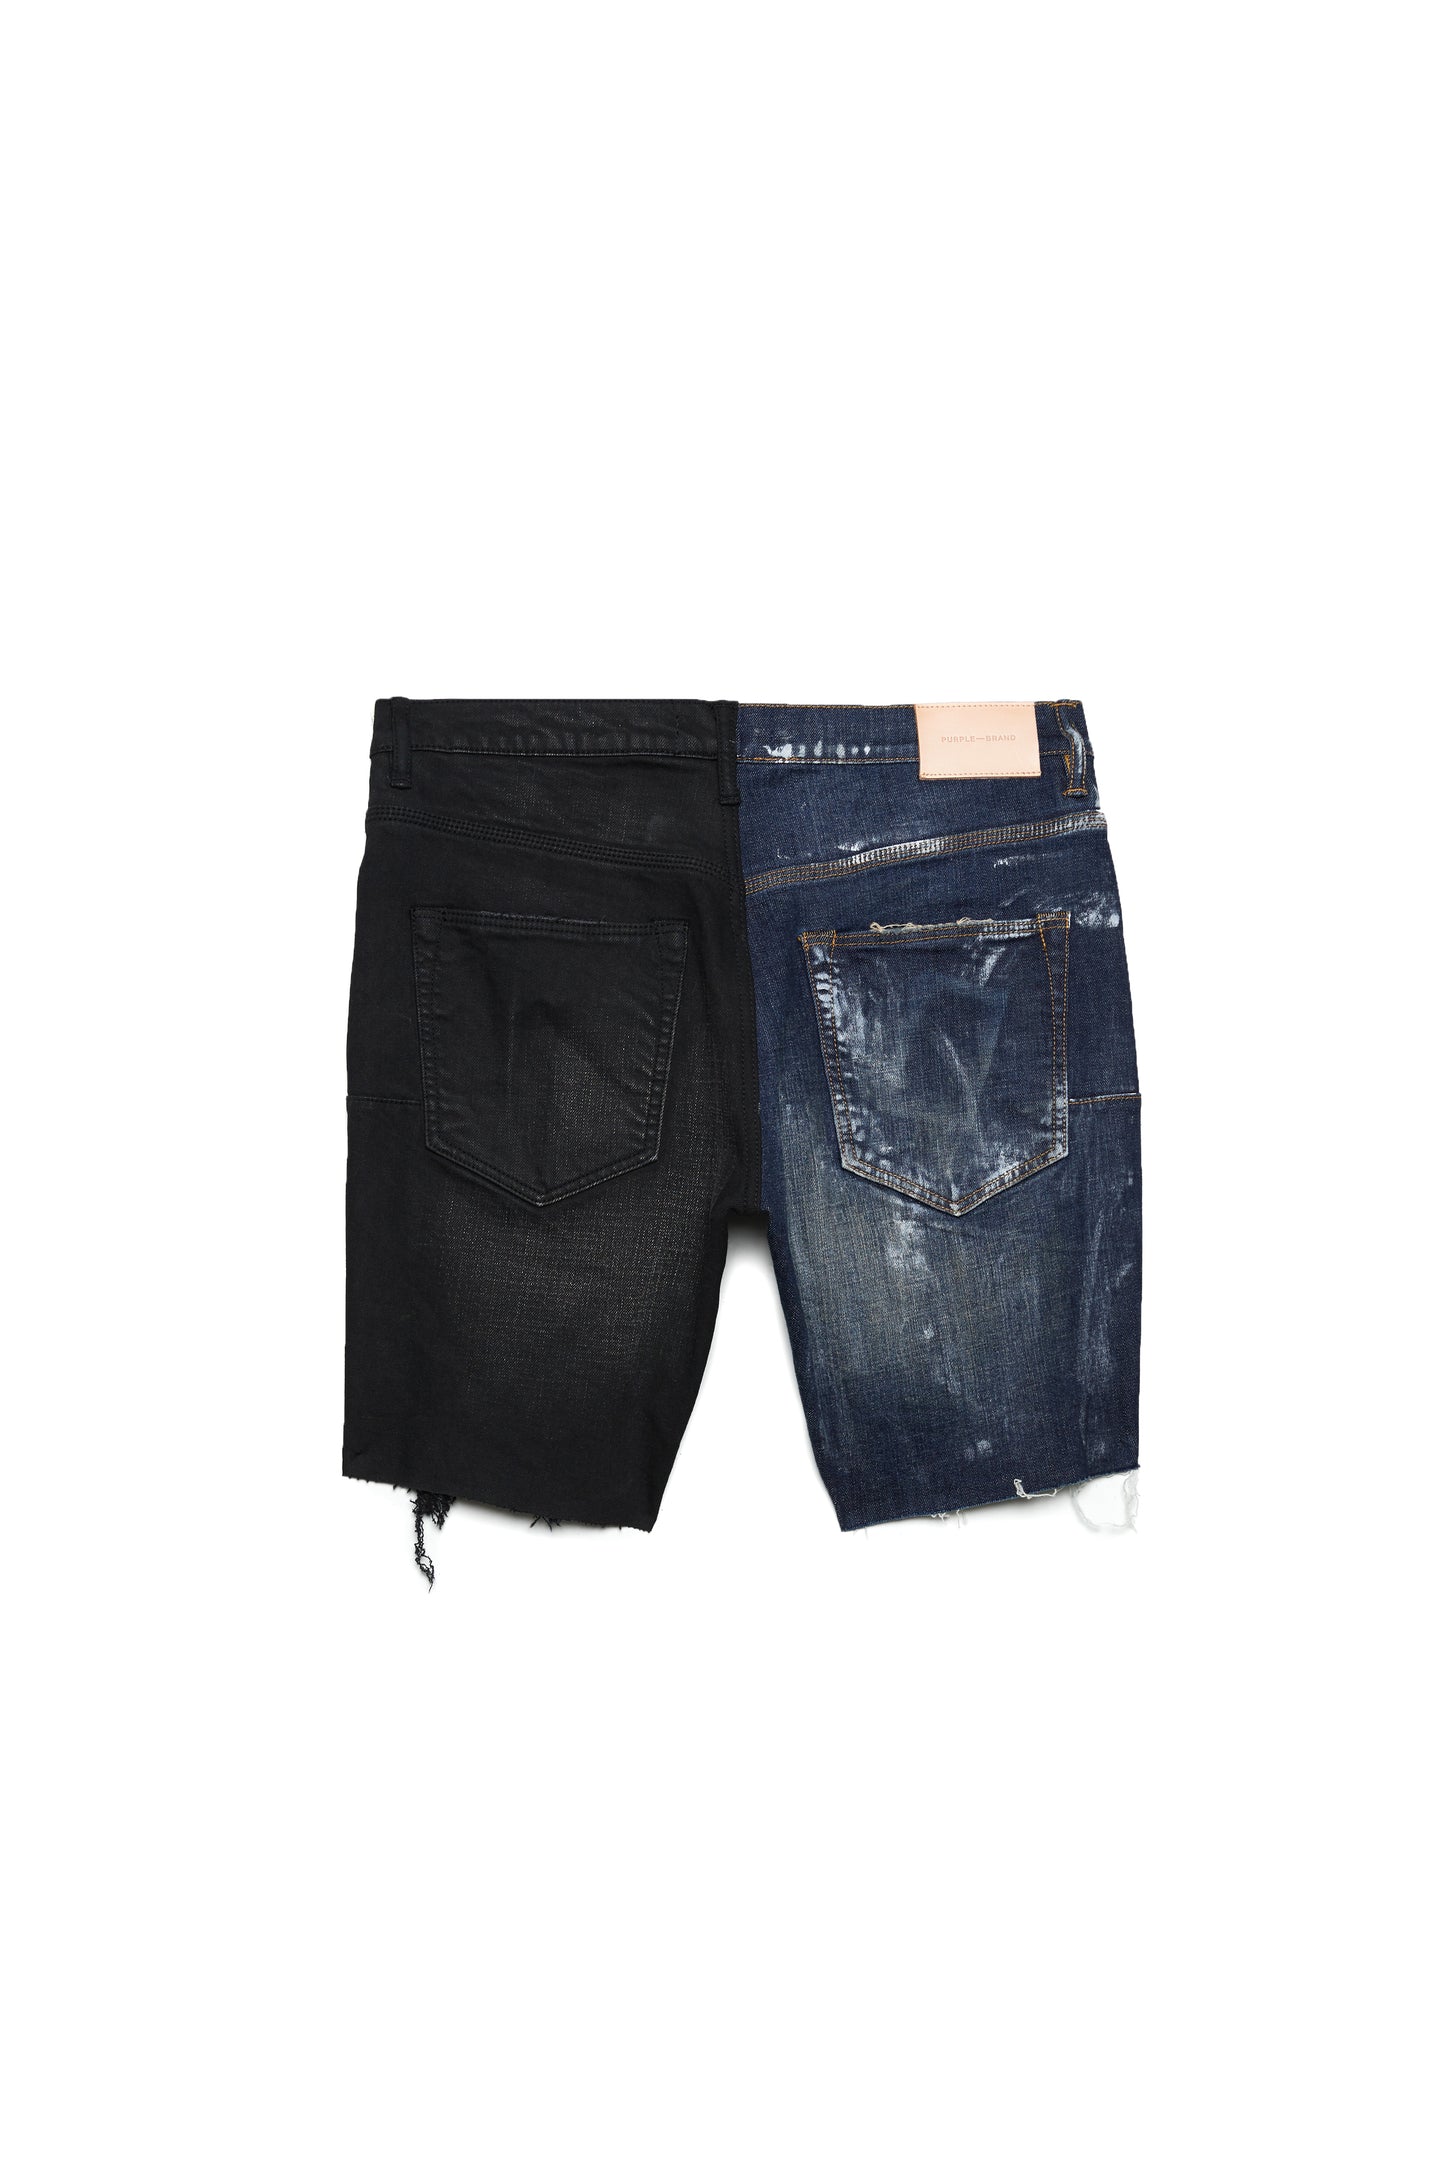 PURPLE BRAND - Men's Denim Jean Short - Mid Rise Short - Style No. P020 - Half and Half Short - Back